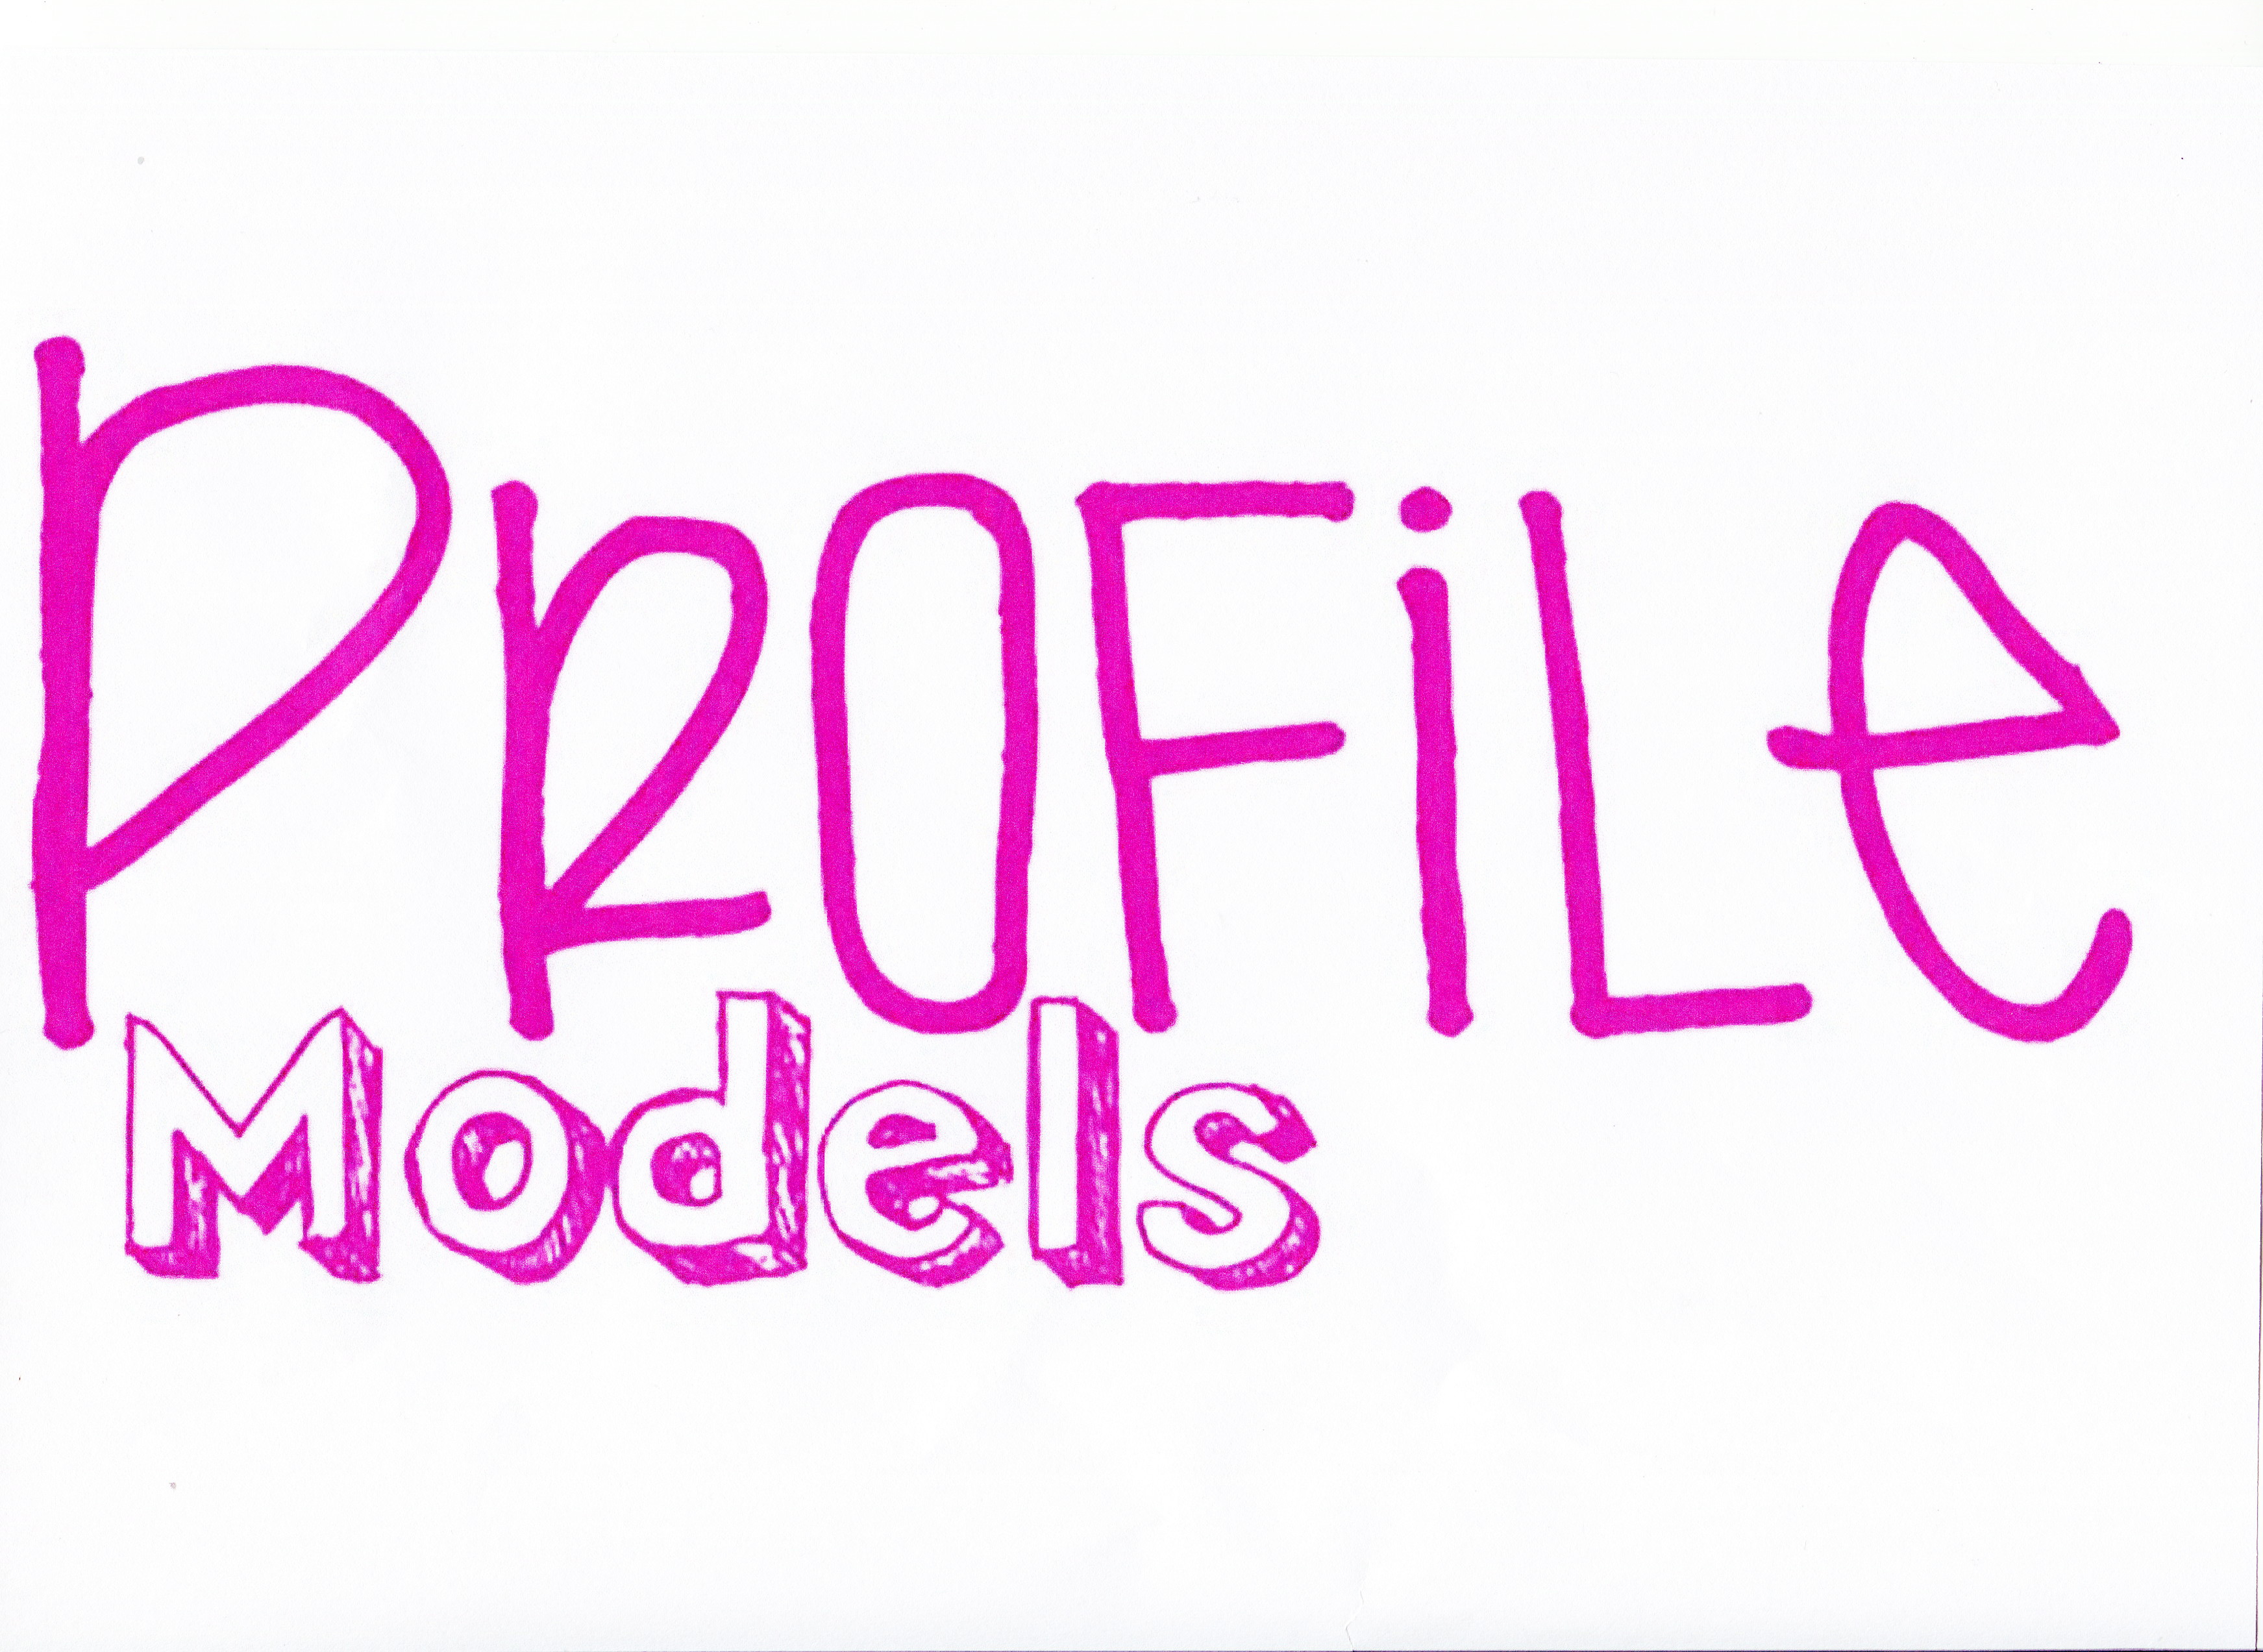 Profile Model Management Ltd